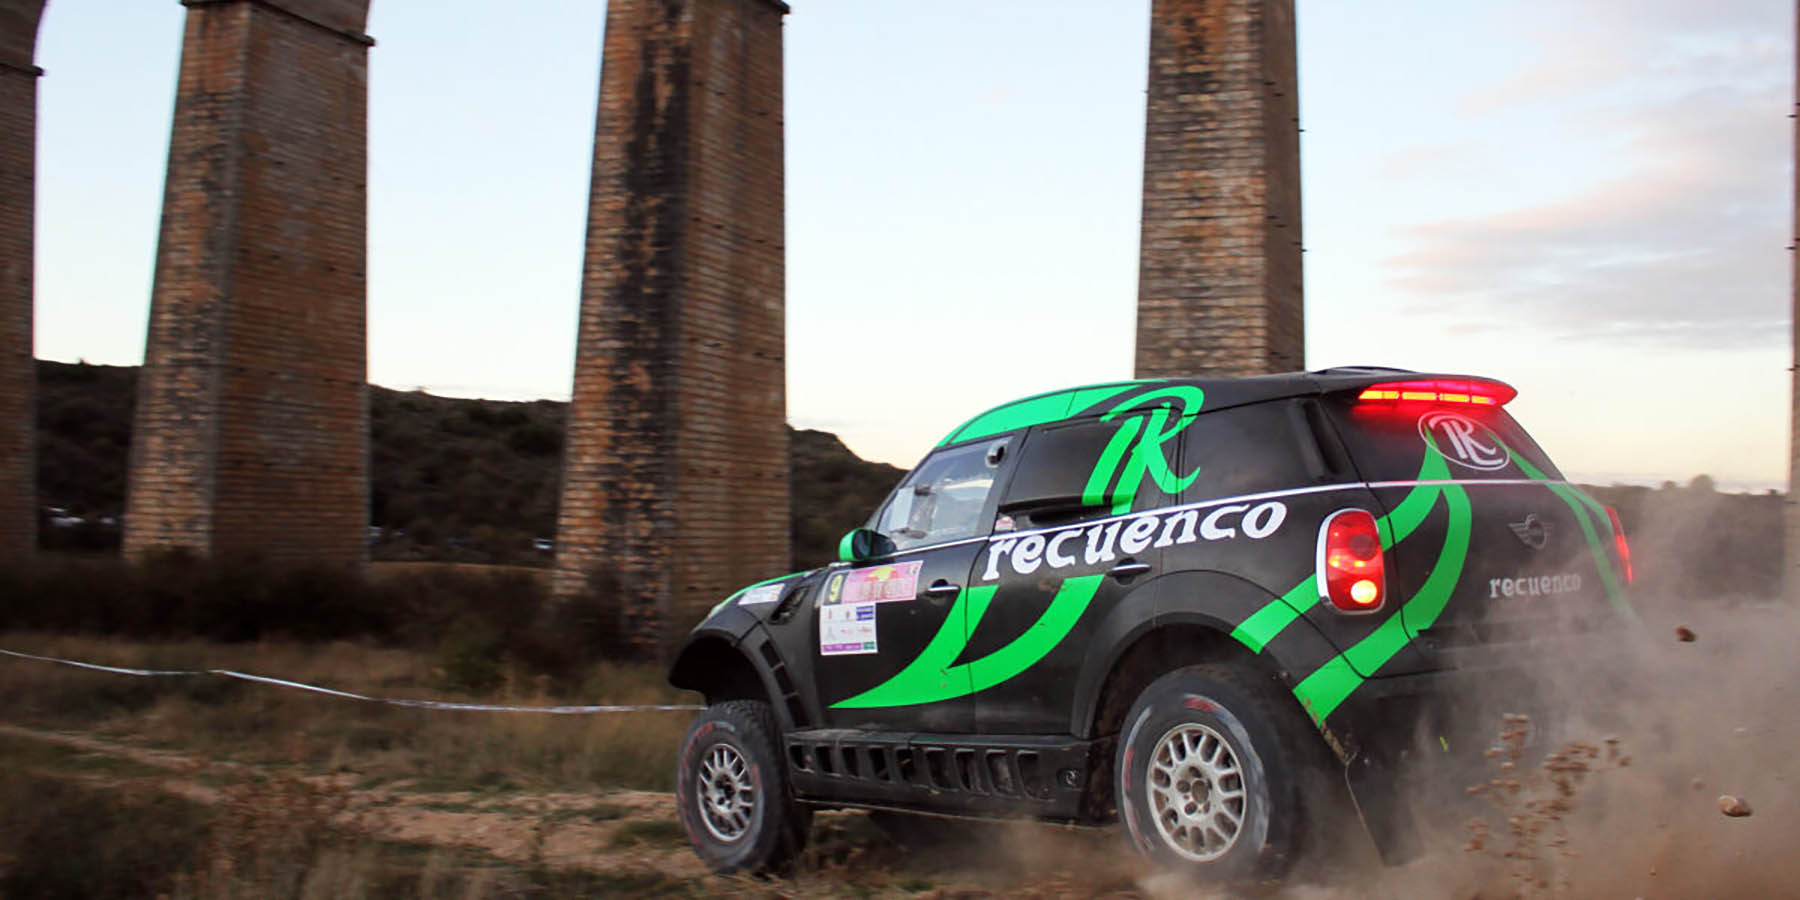 Rallye TT Cuenca 2021: Recuenco wins at home, Verdú closes in on SSV title